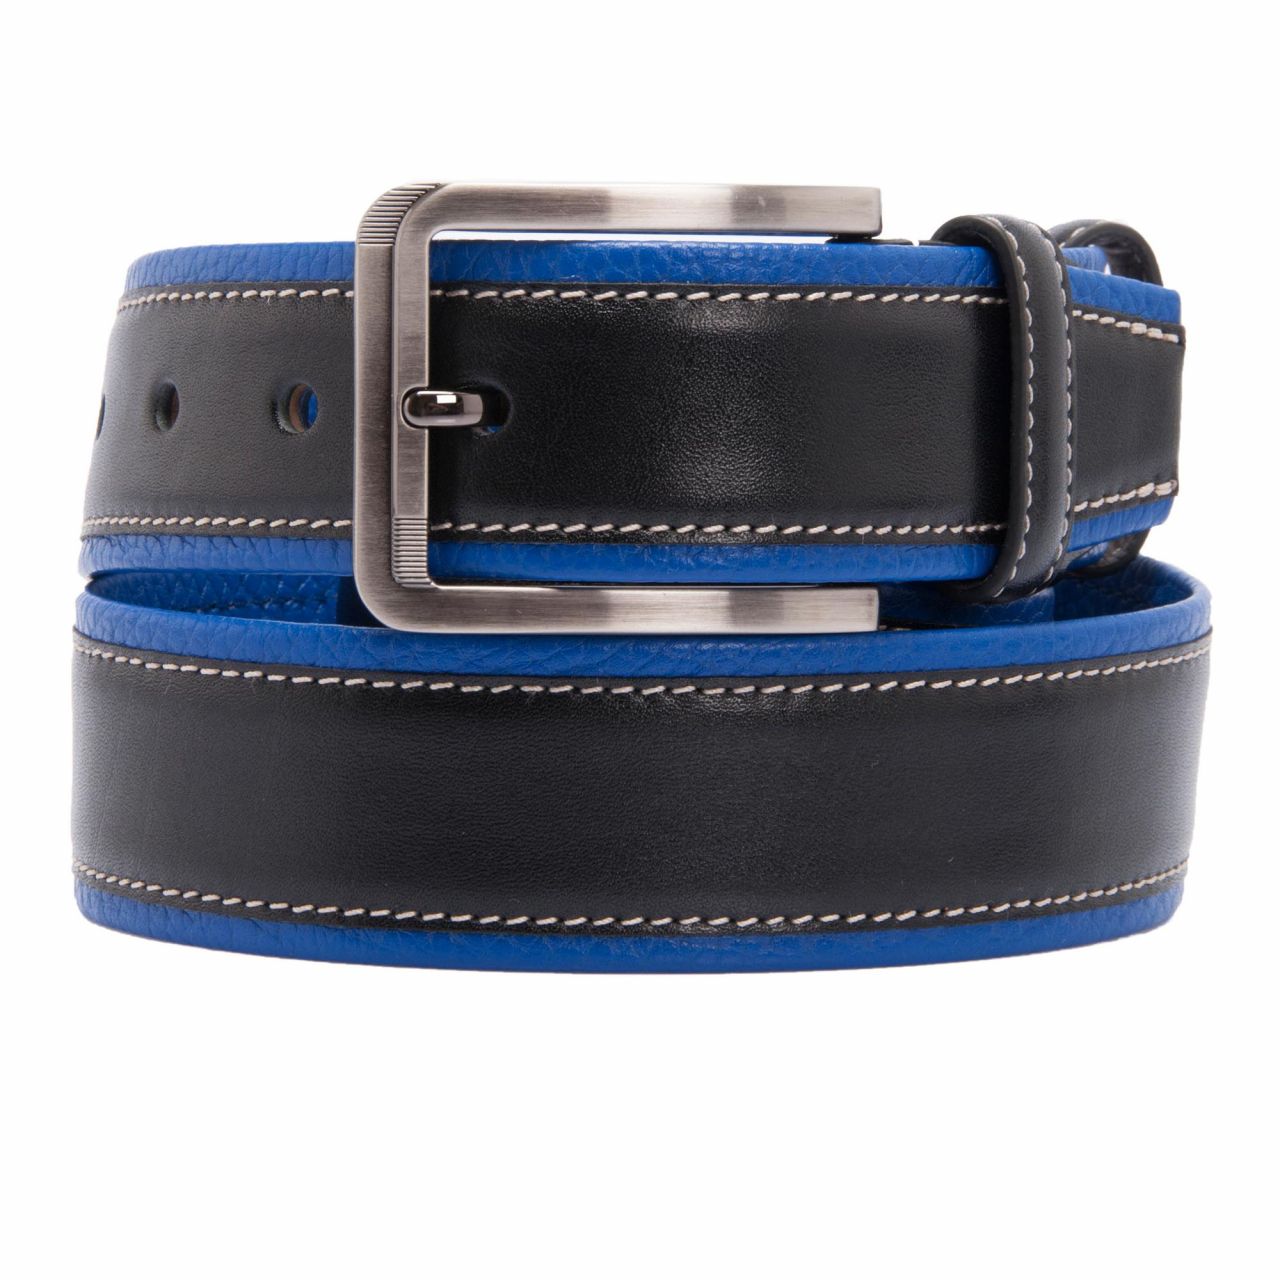 Men's leather belt in black and blue